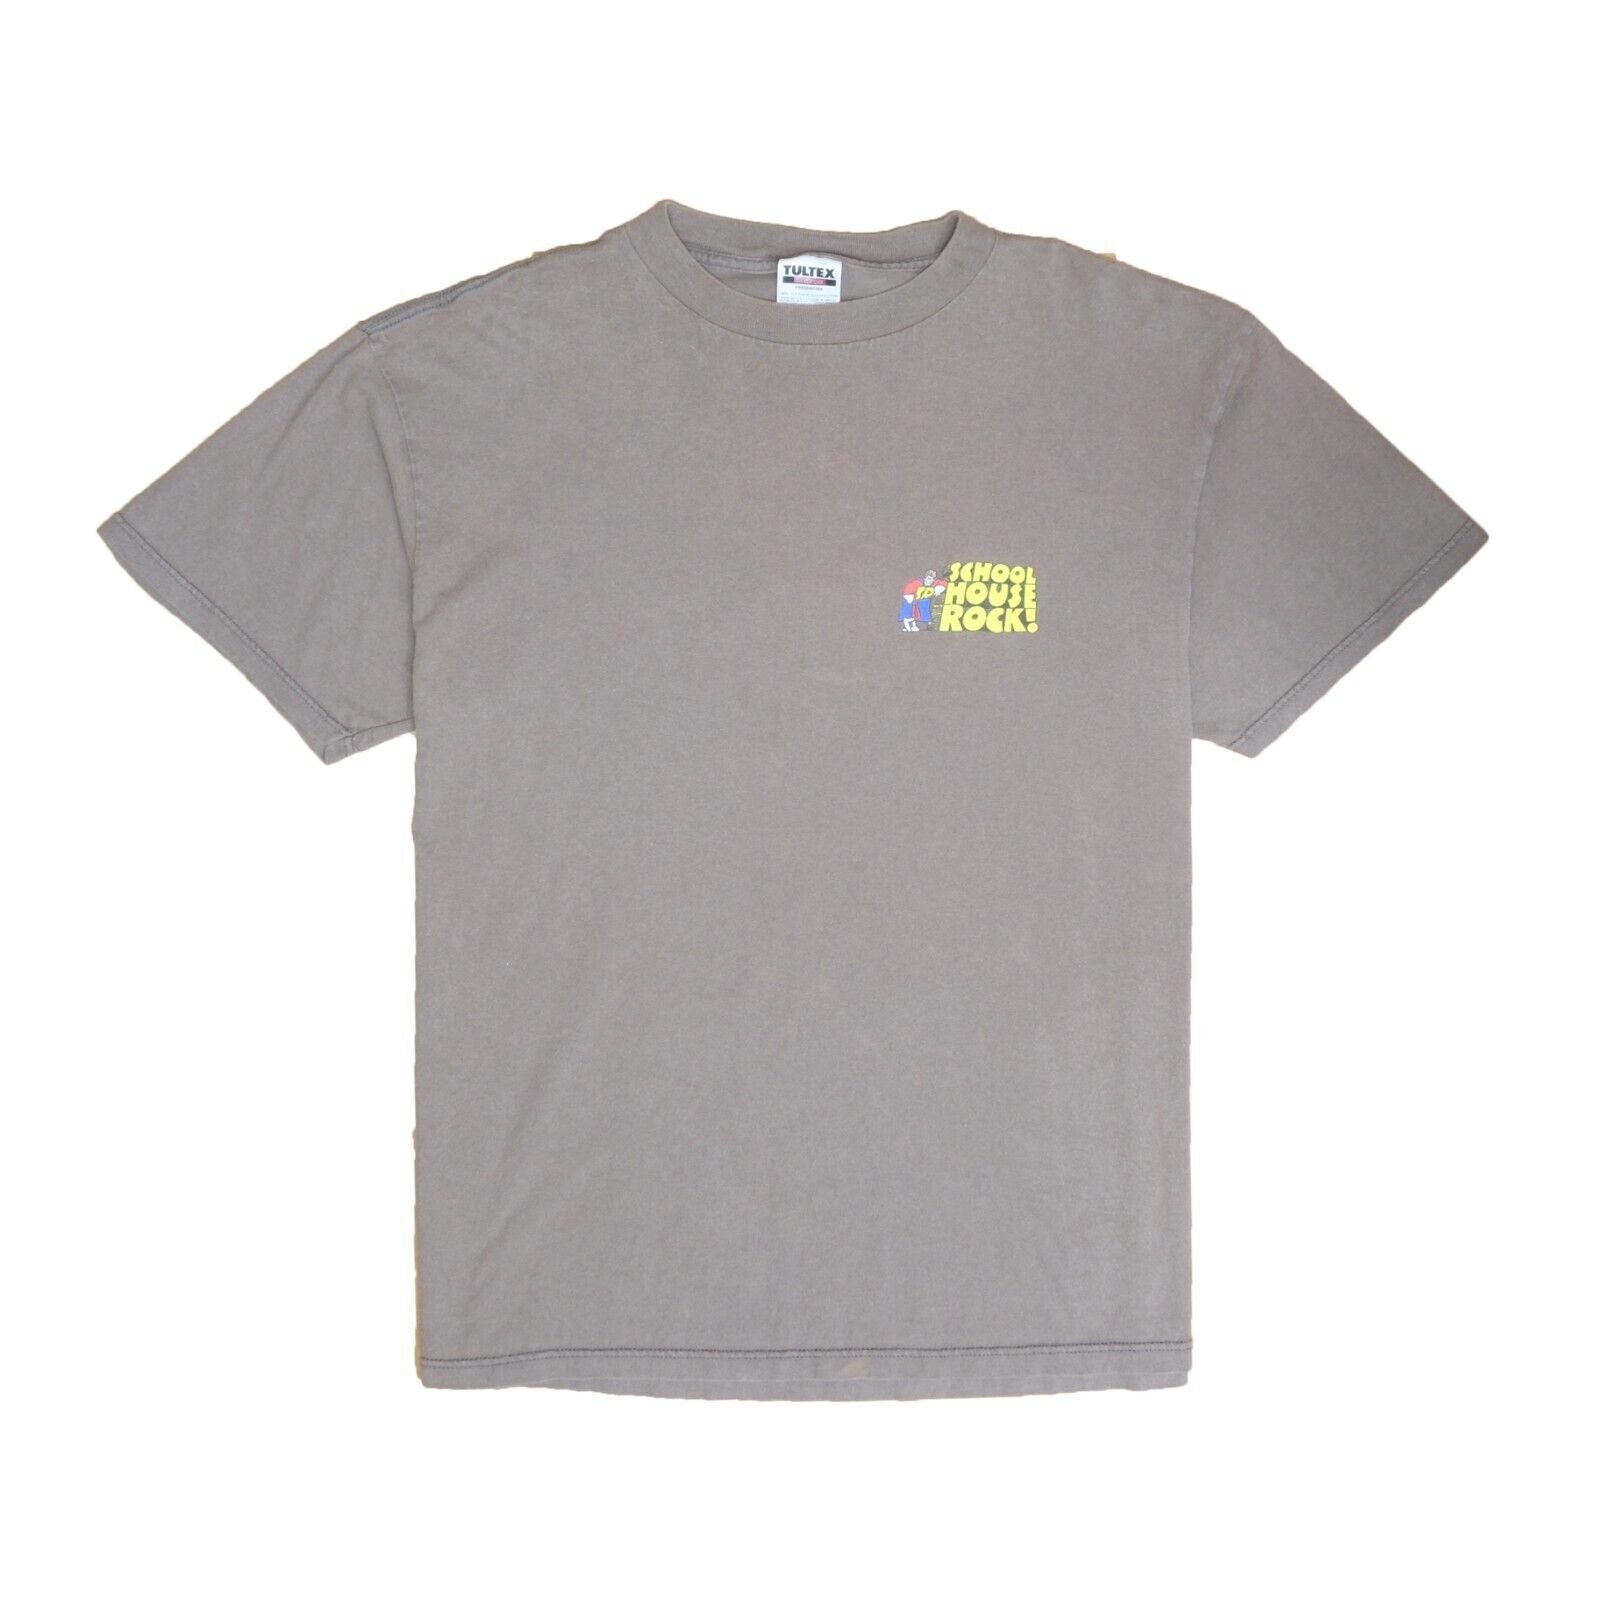 Vintage School House Rock Conjunction Junction T-Shirt Size XL Brown 90s